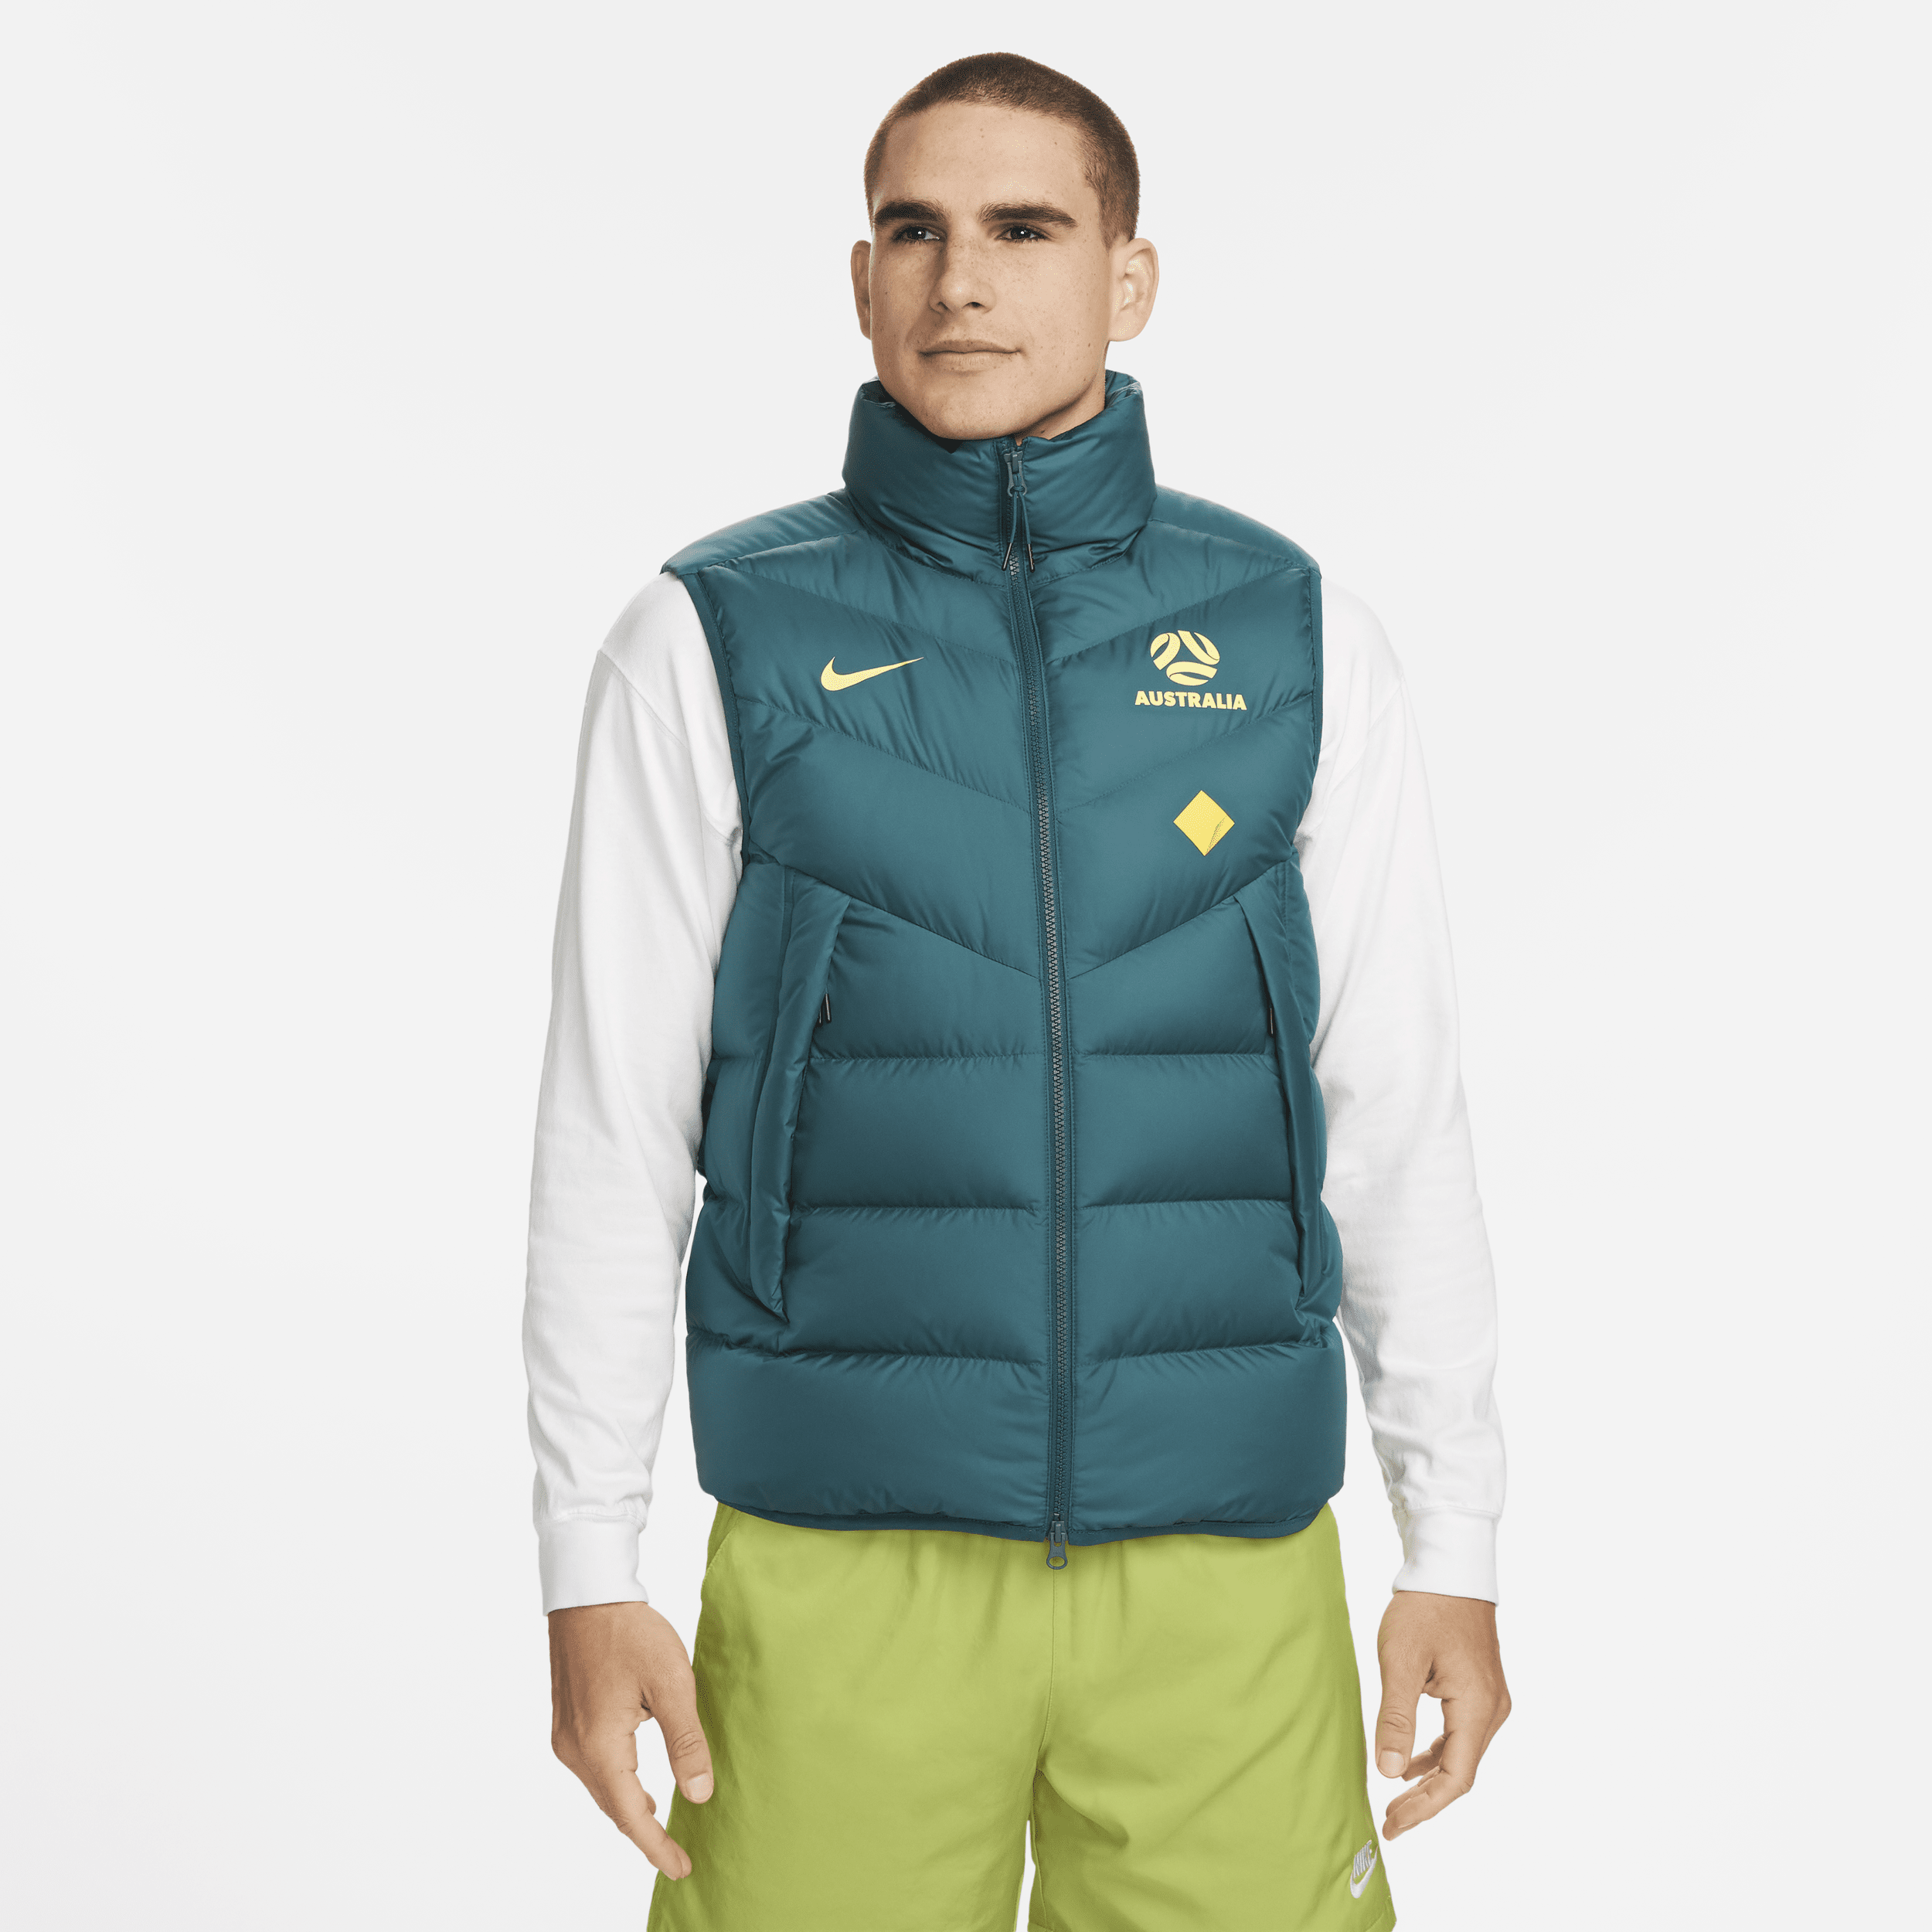 Australien Windrunner – Nike Football med dunvest til mænd - grøn